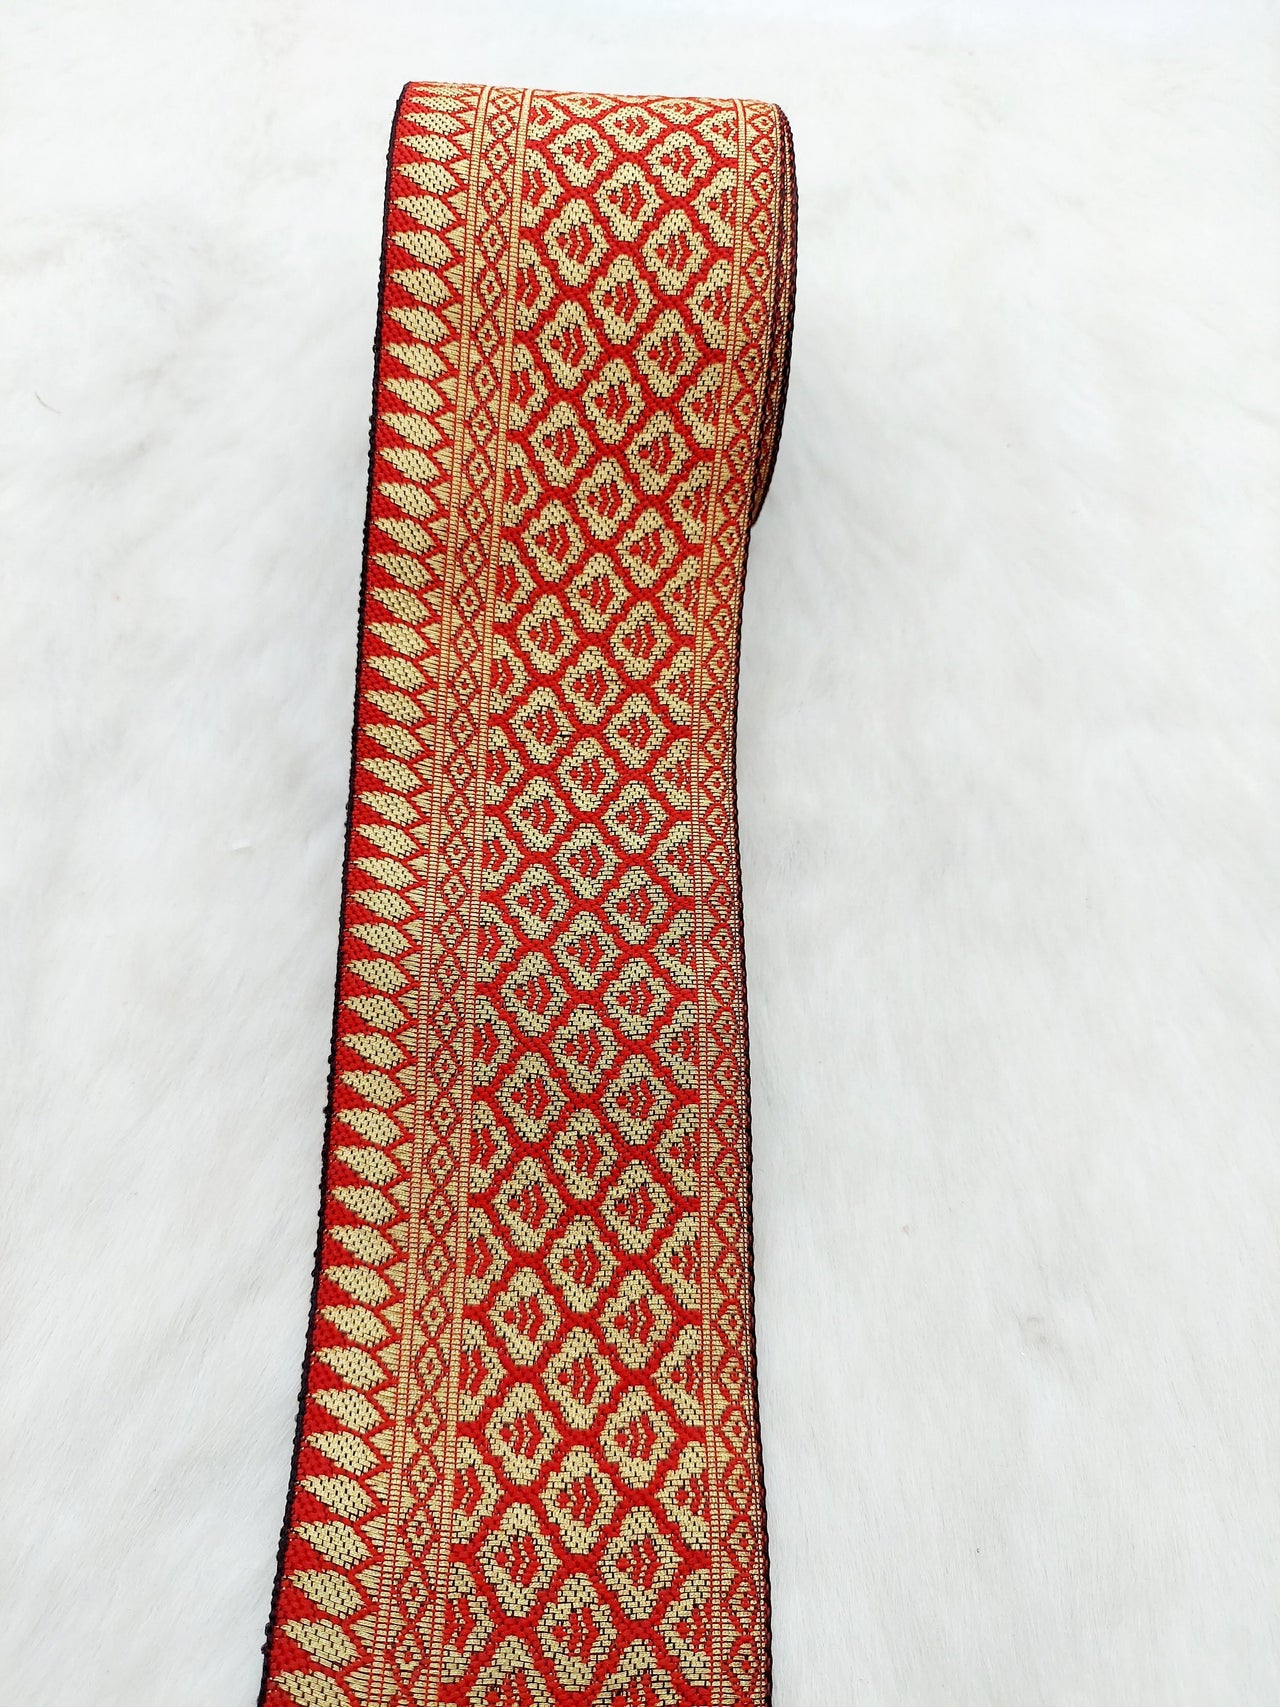 Jacquard Saree Border, Red And Gold Woven Thread Work Trim, Jacquard Trimming Decorative Trim